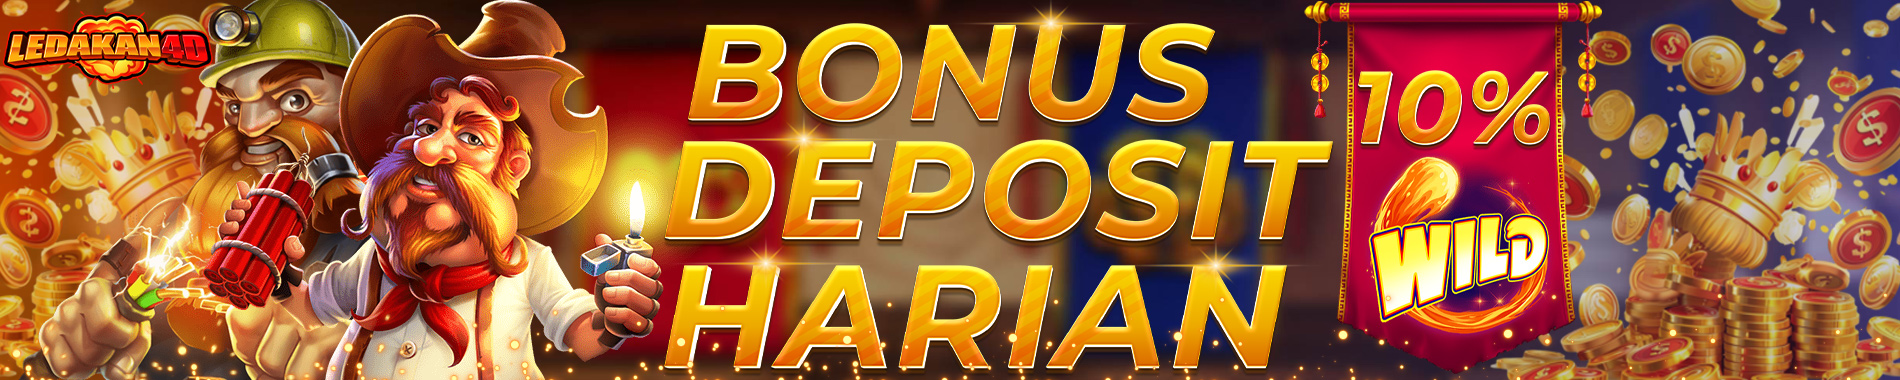 Bonus-Deposit-Harian-10%-LEDAKAN4D